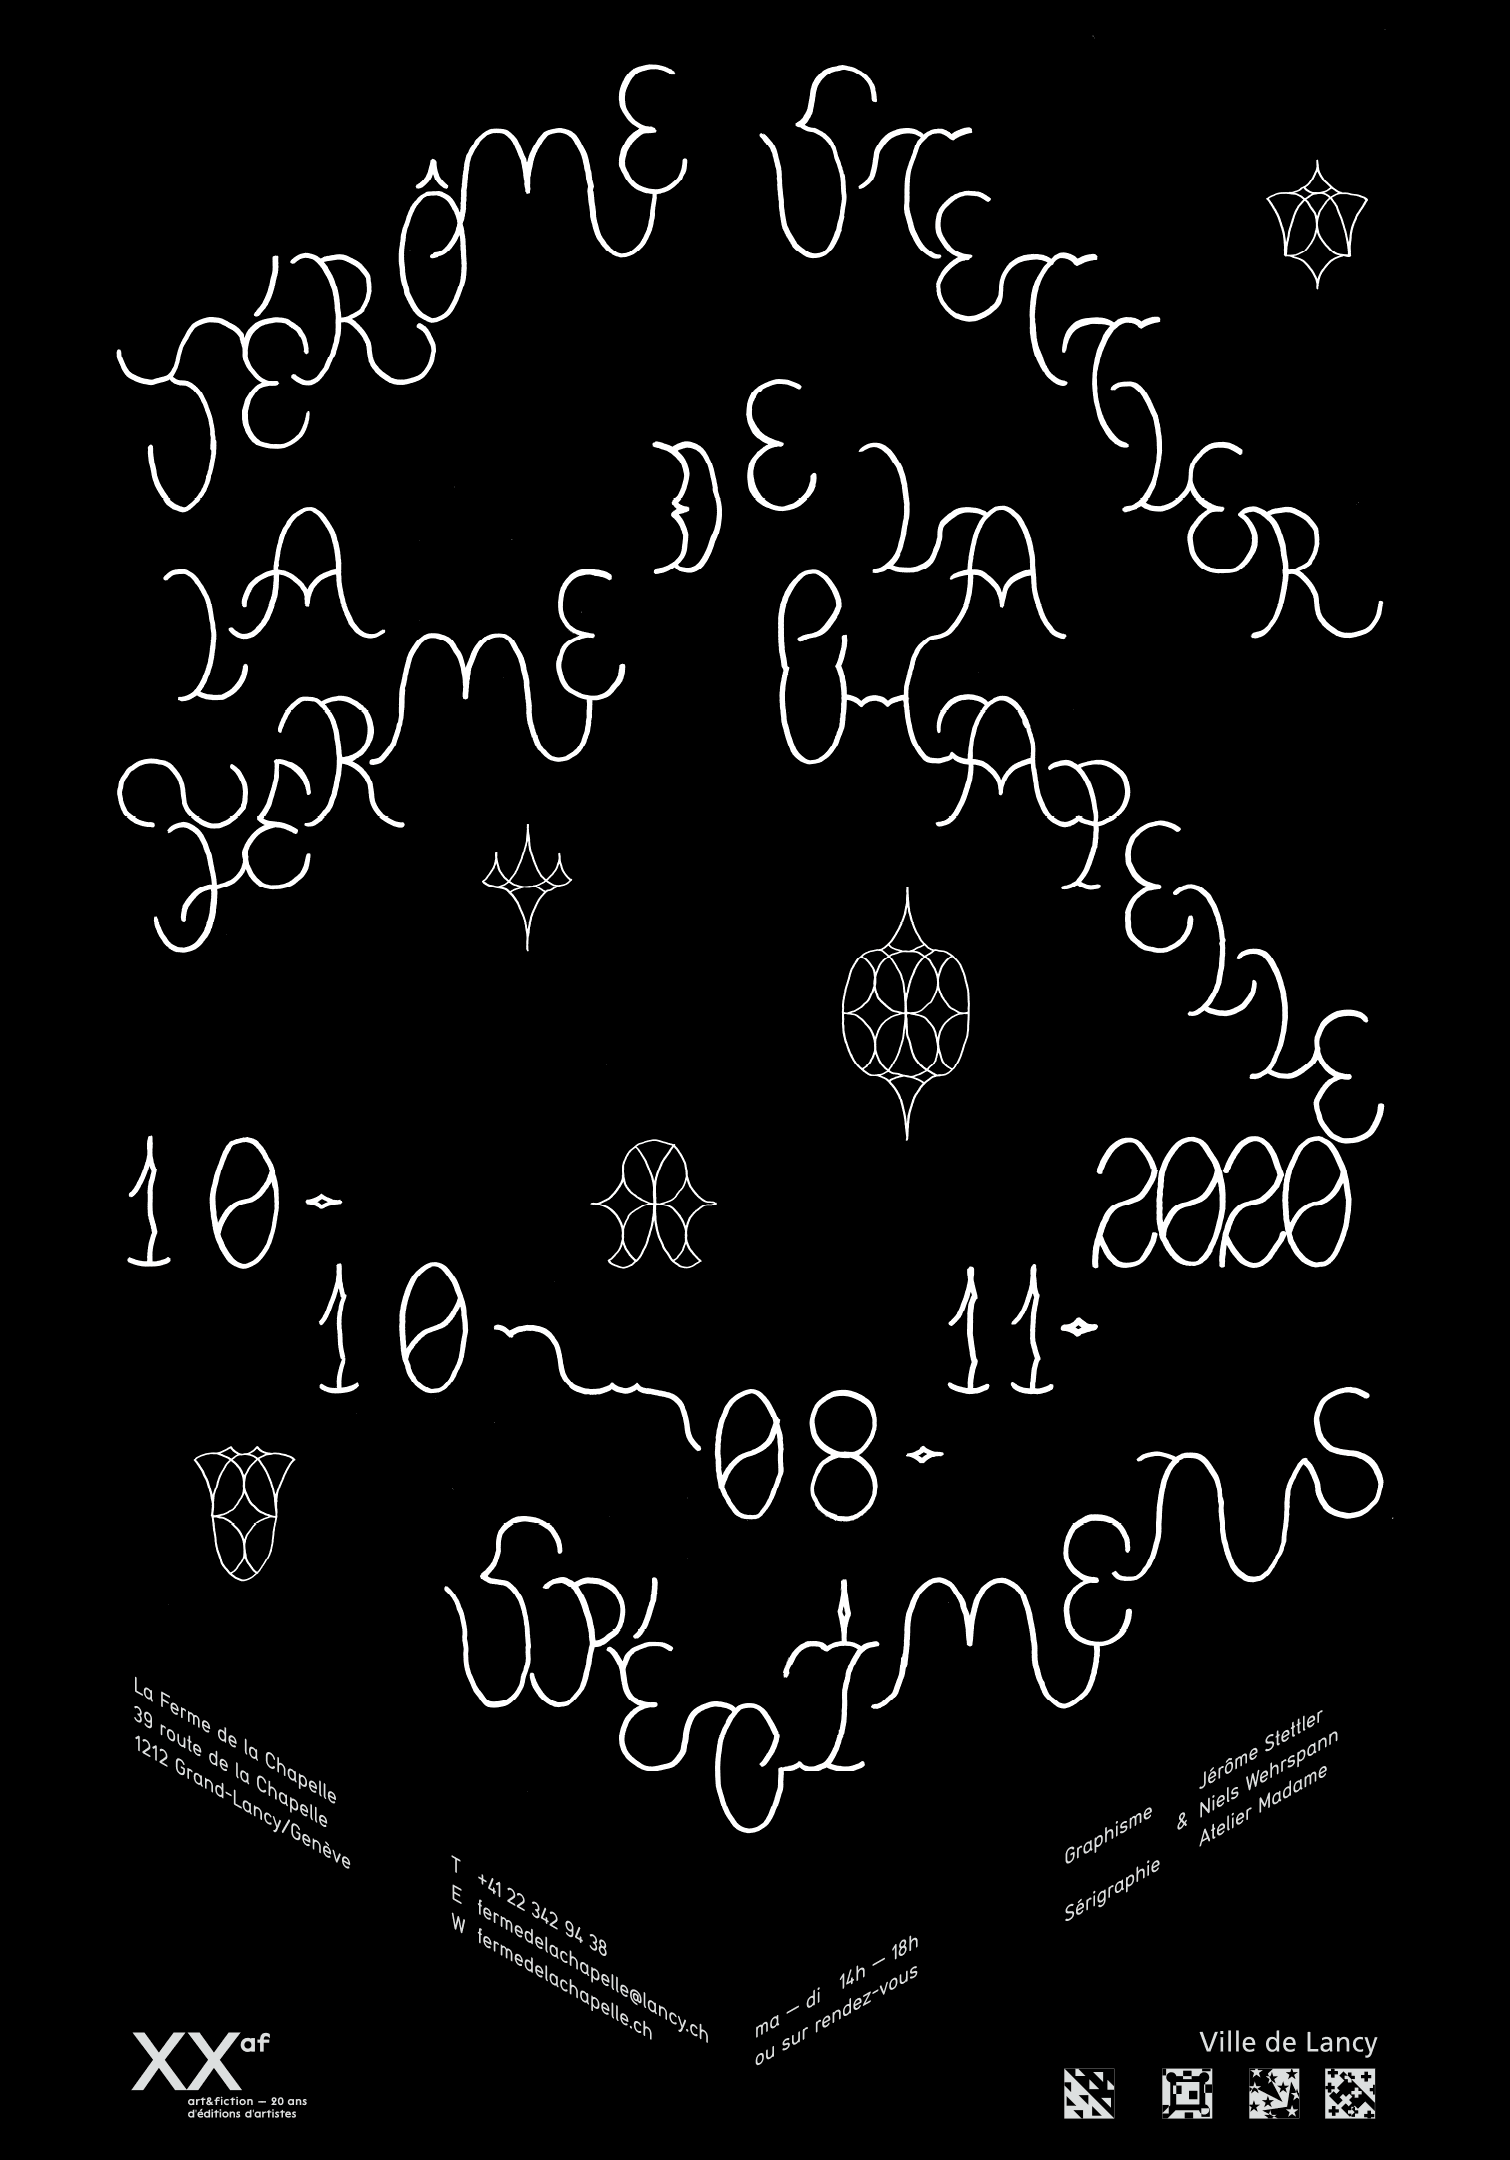 Modular lettering on the poster for Jérôme Stettler's exhibition